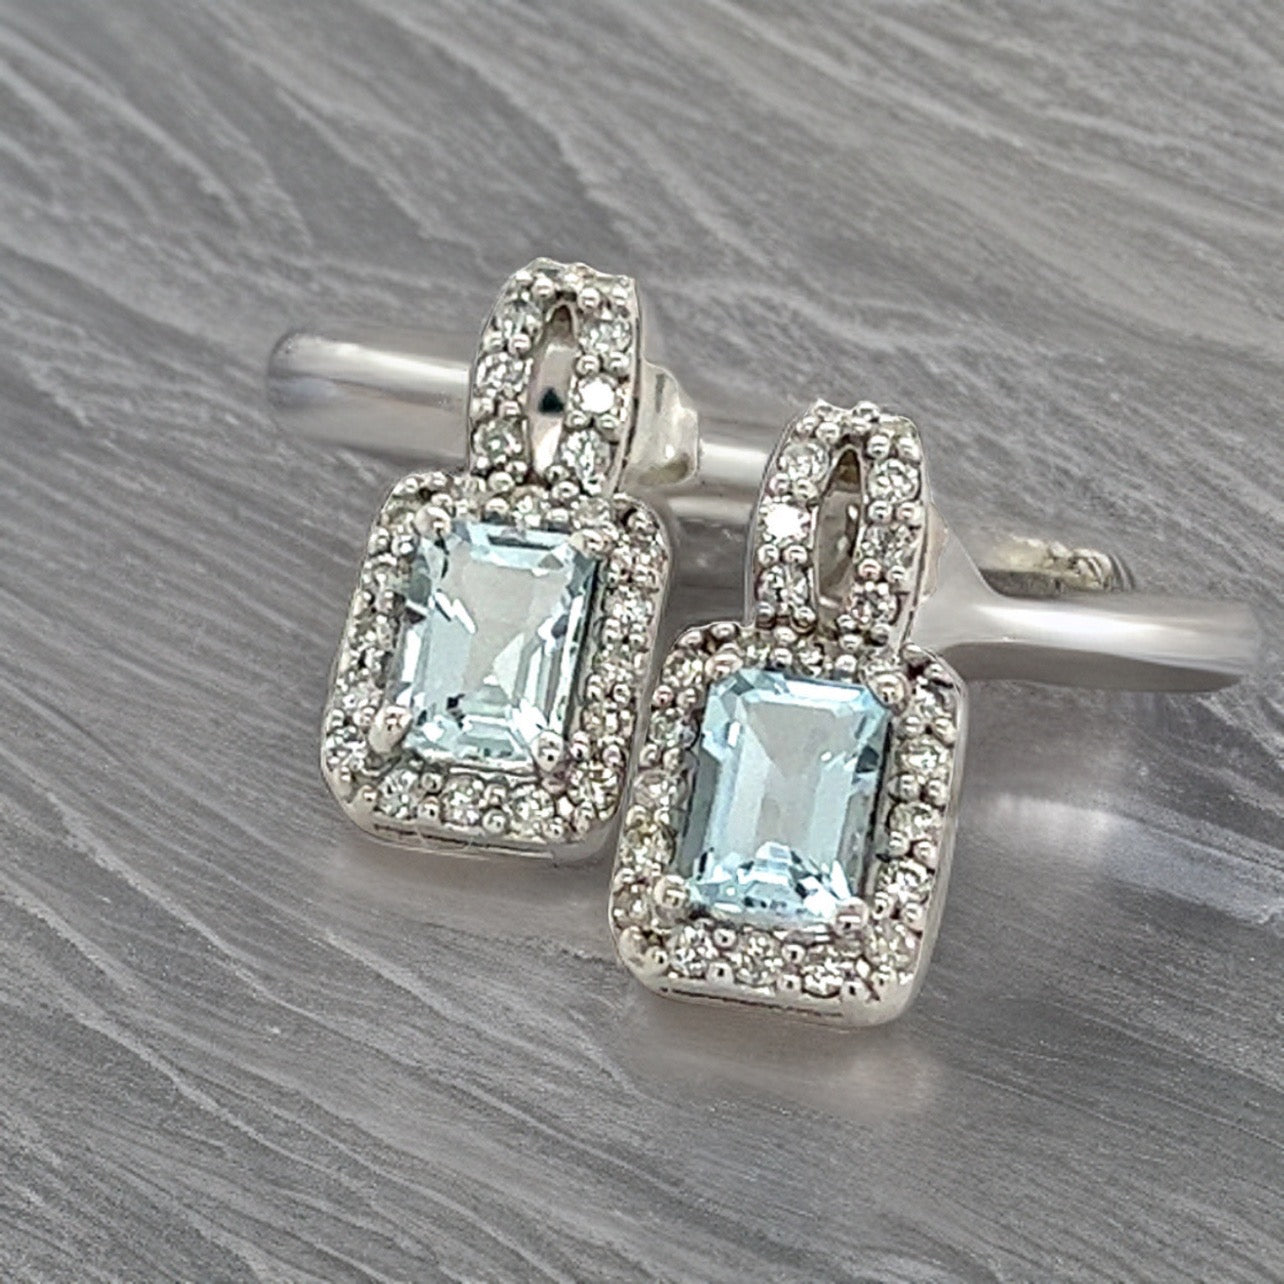 Natural Aquamarine Diamond Earrings 14k Gold 2.38 TCW Certified $4,950 215092